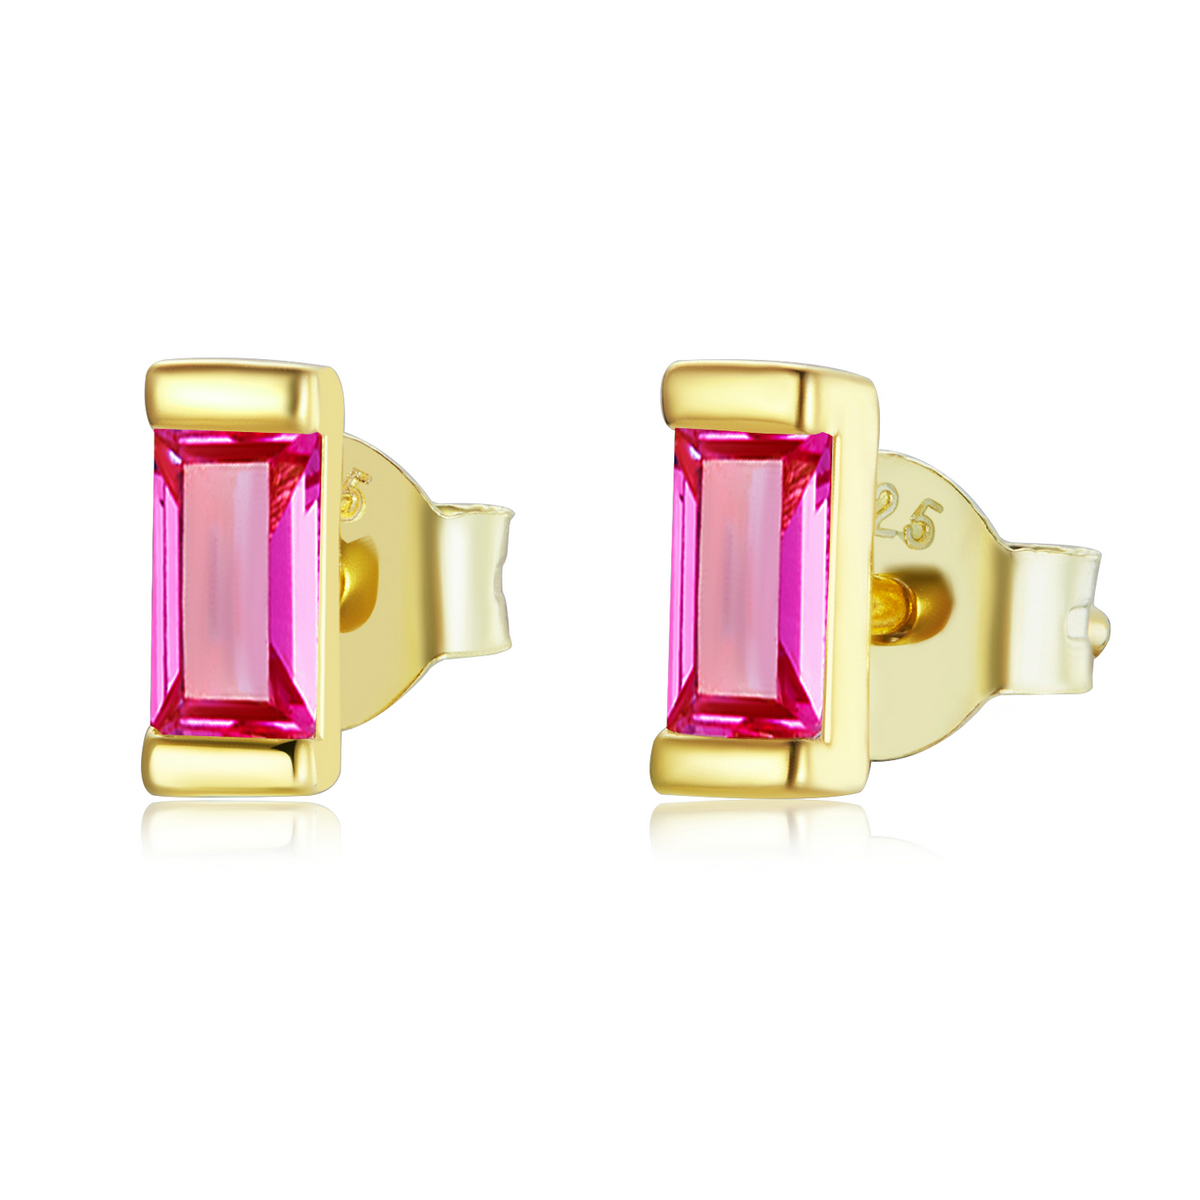 pandora style colorful cubic zirconium pink stud earrings sce1241 or